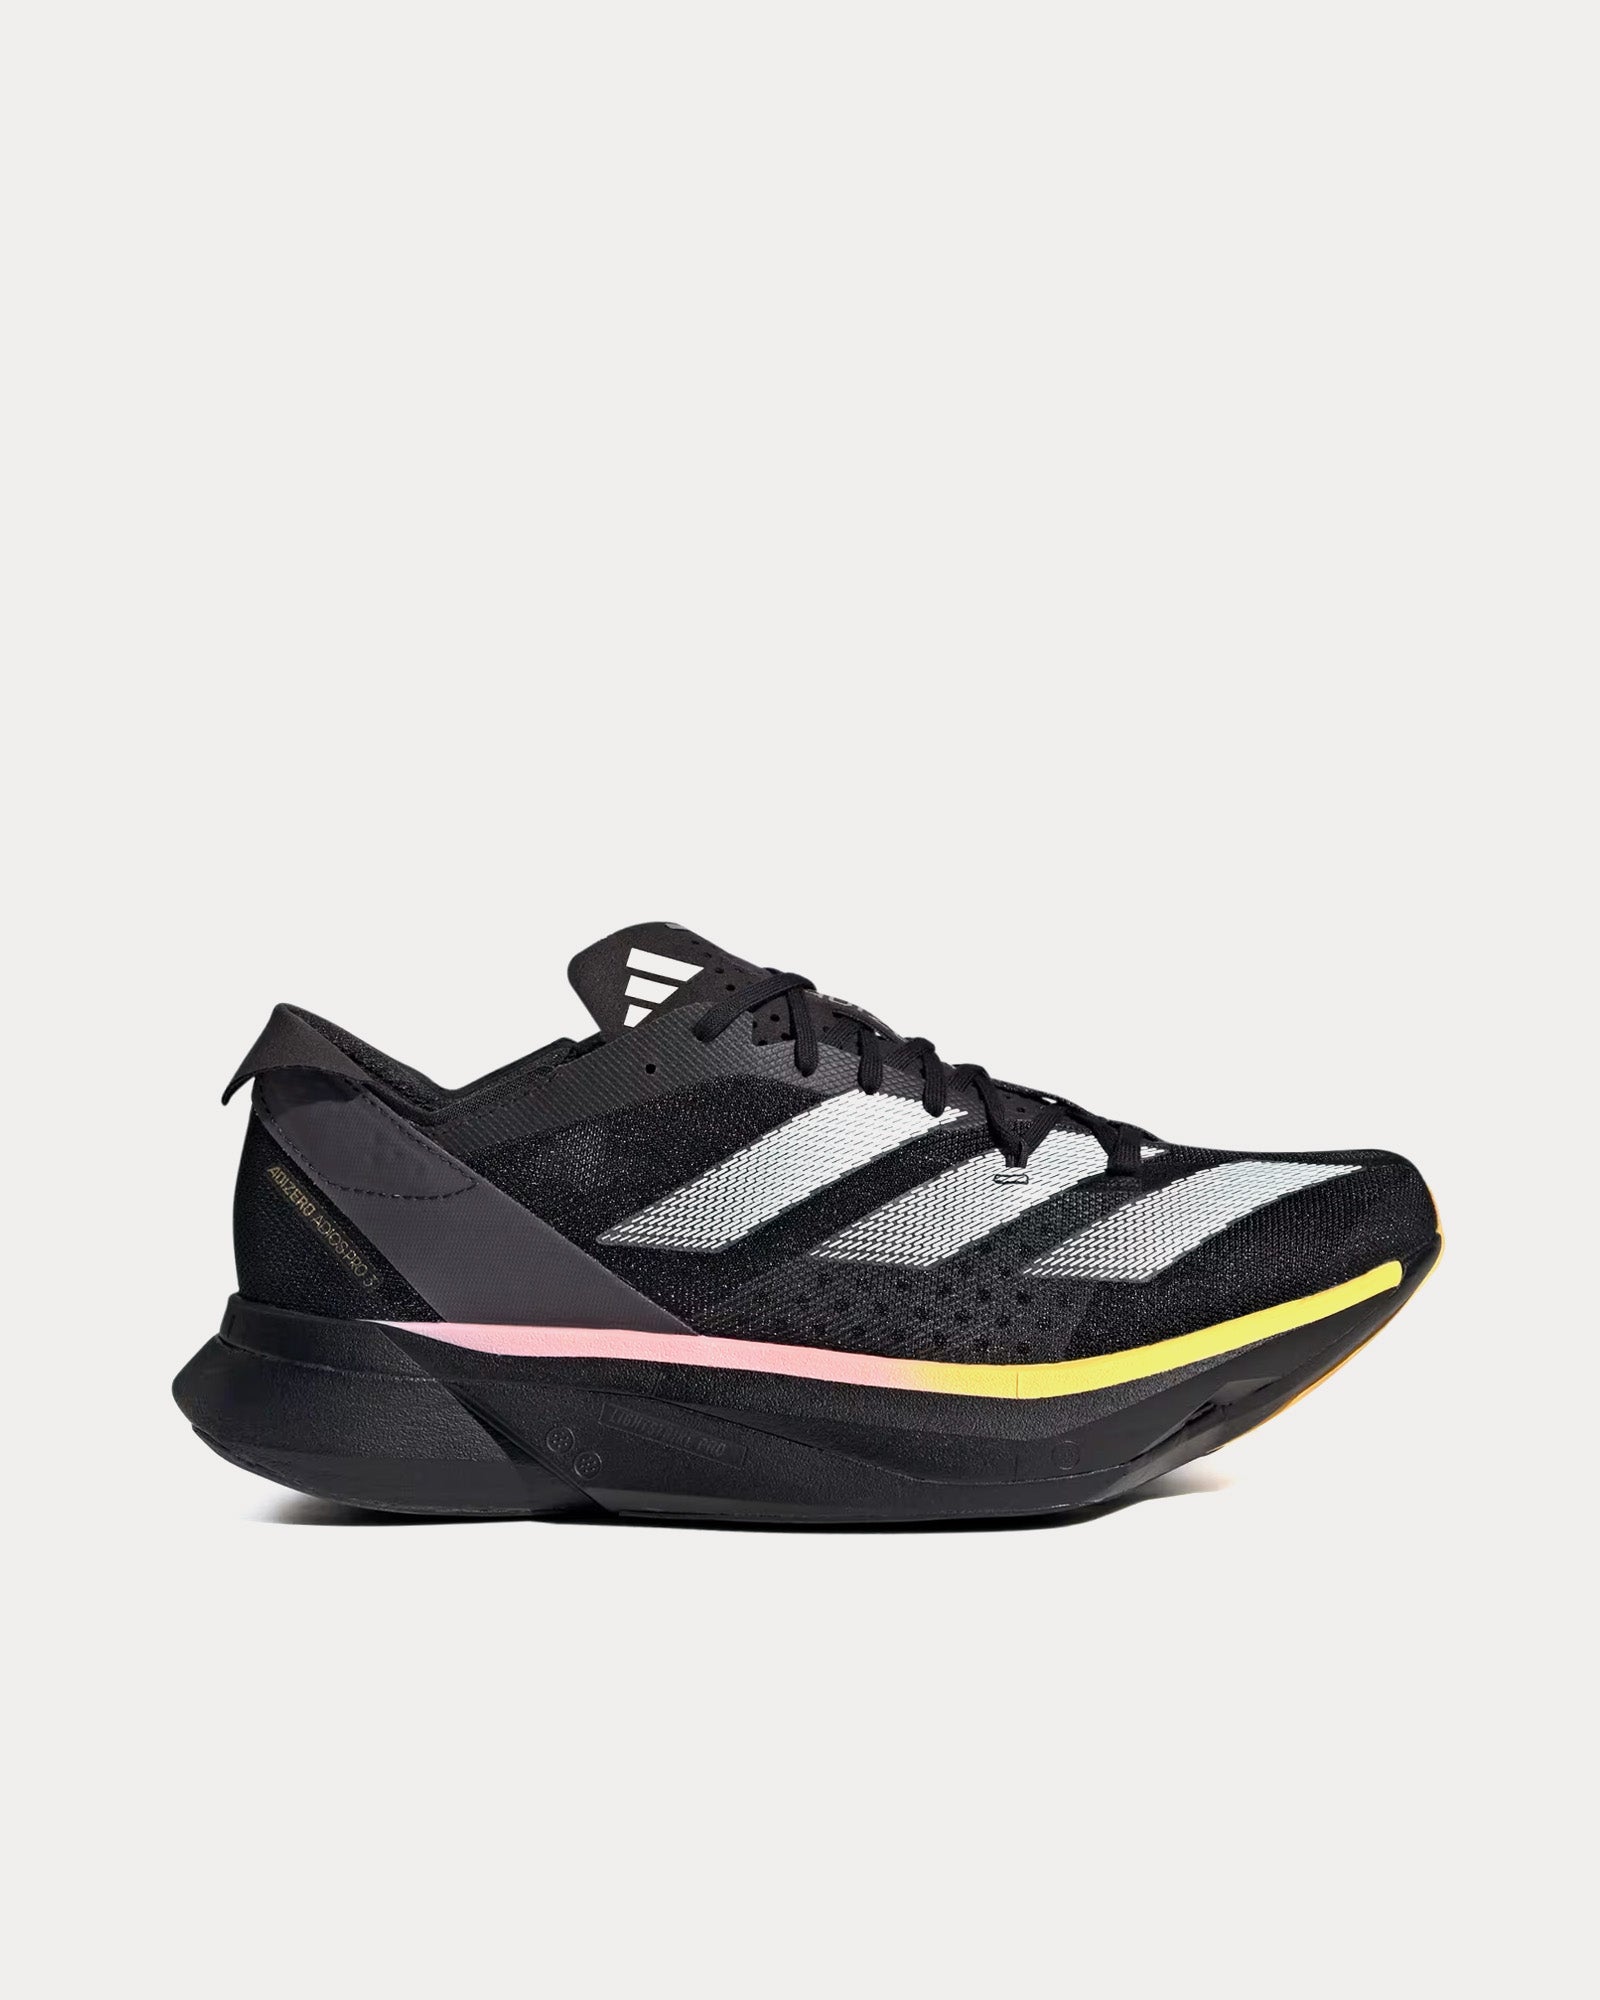 Adidas - Adios Pro 3 Core Black / Zero Metalic / Spark Running Shoes